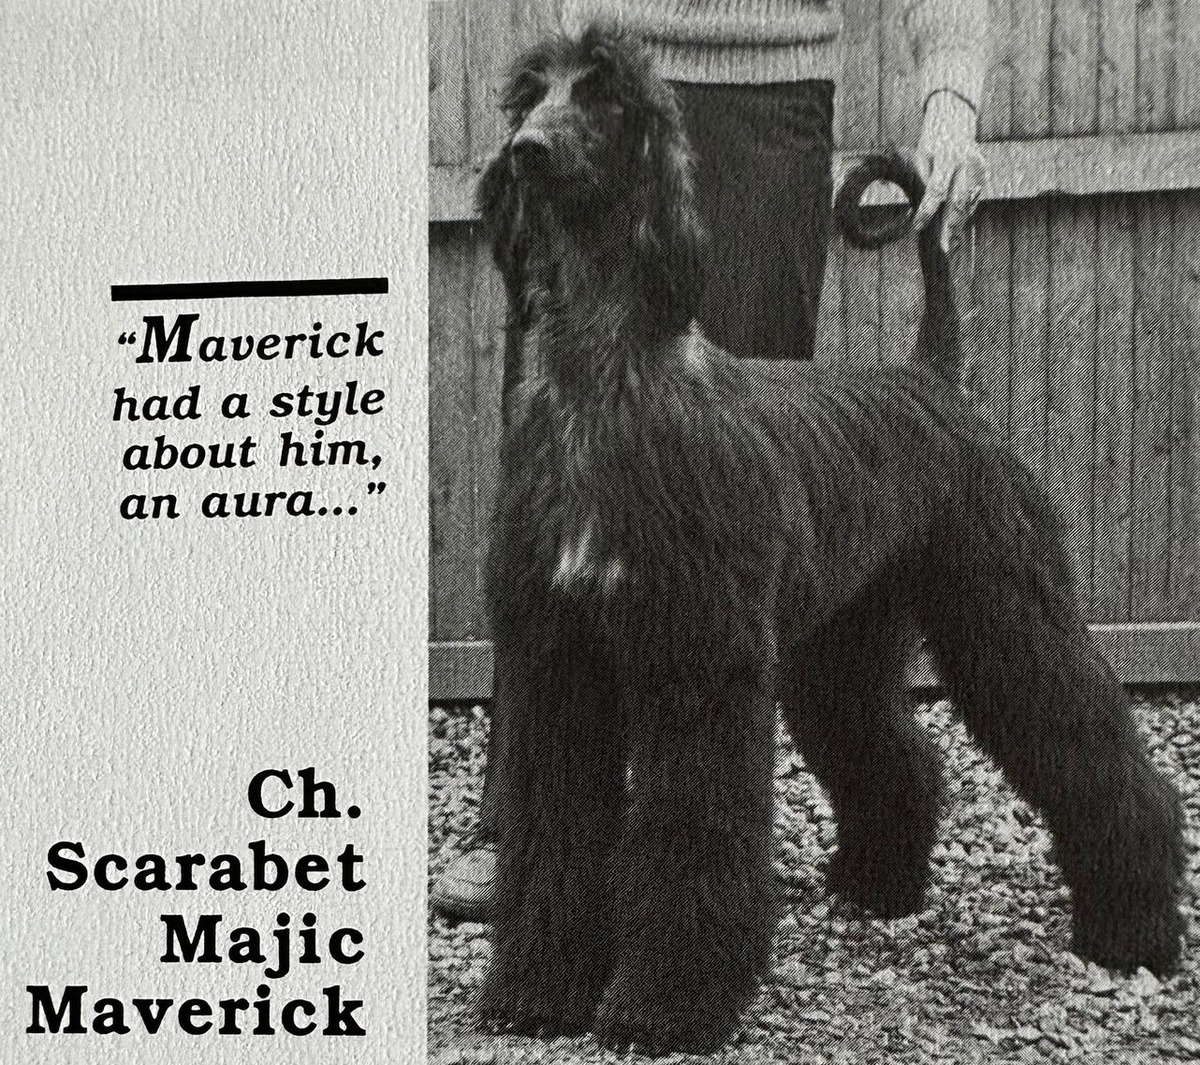 Image of Scarabet's Majic Maverick